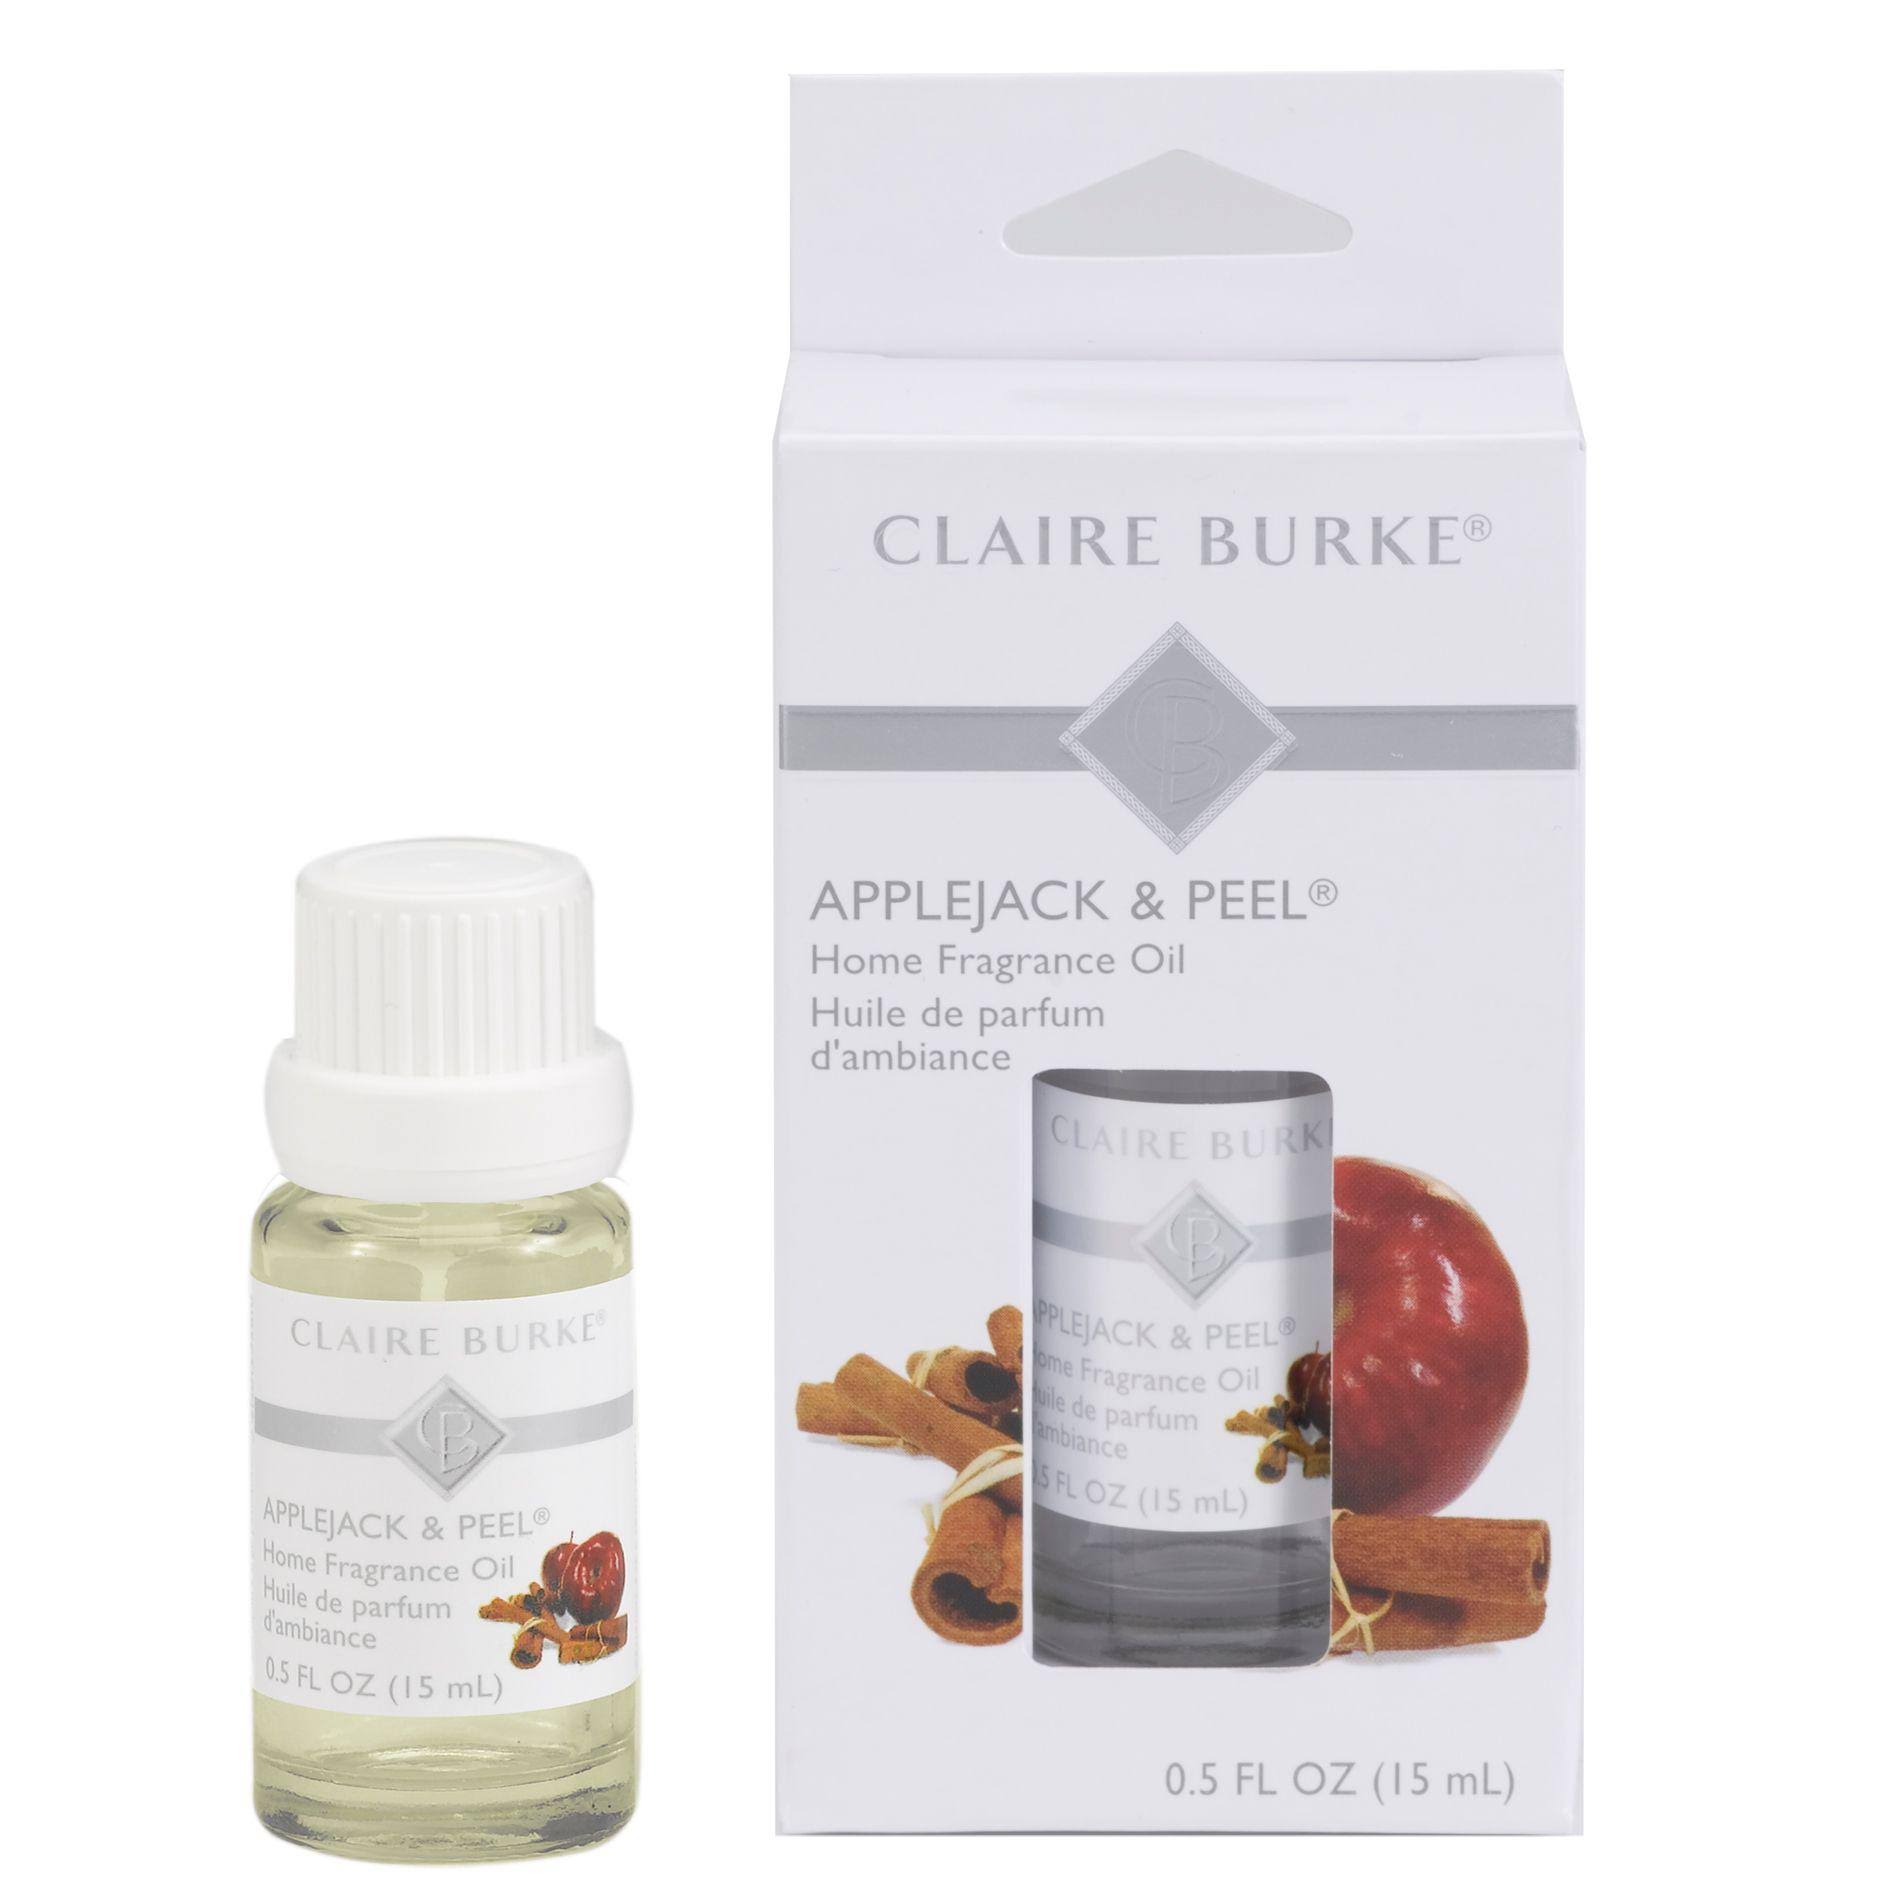 Claire Burke Applejack & Peel Home Fragrance Oil